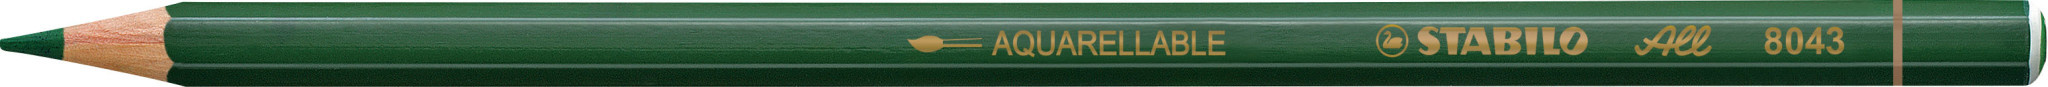 Stabilo All 8043 Green Glass Marking Pencil